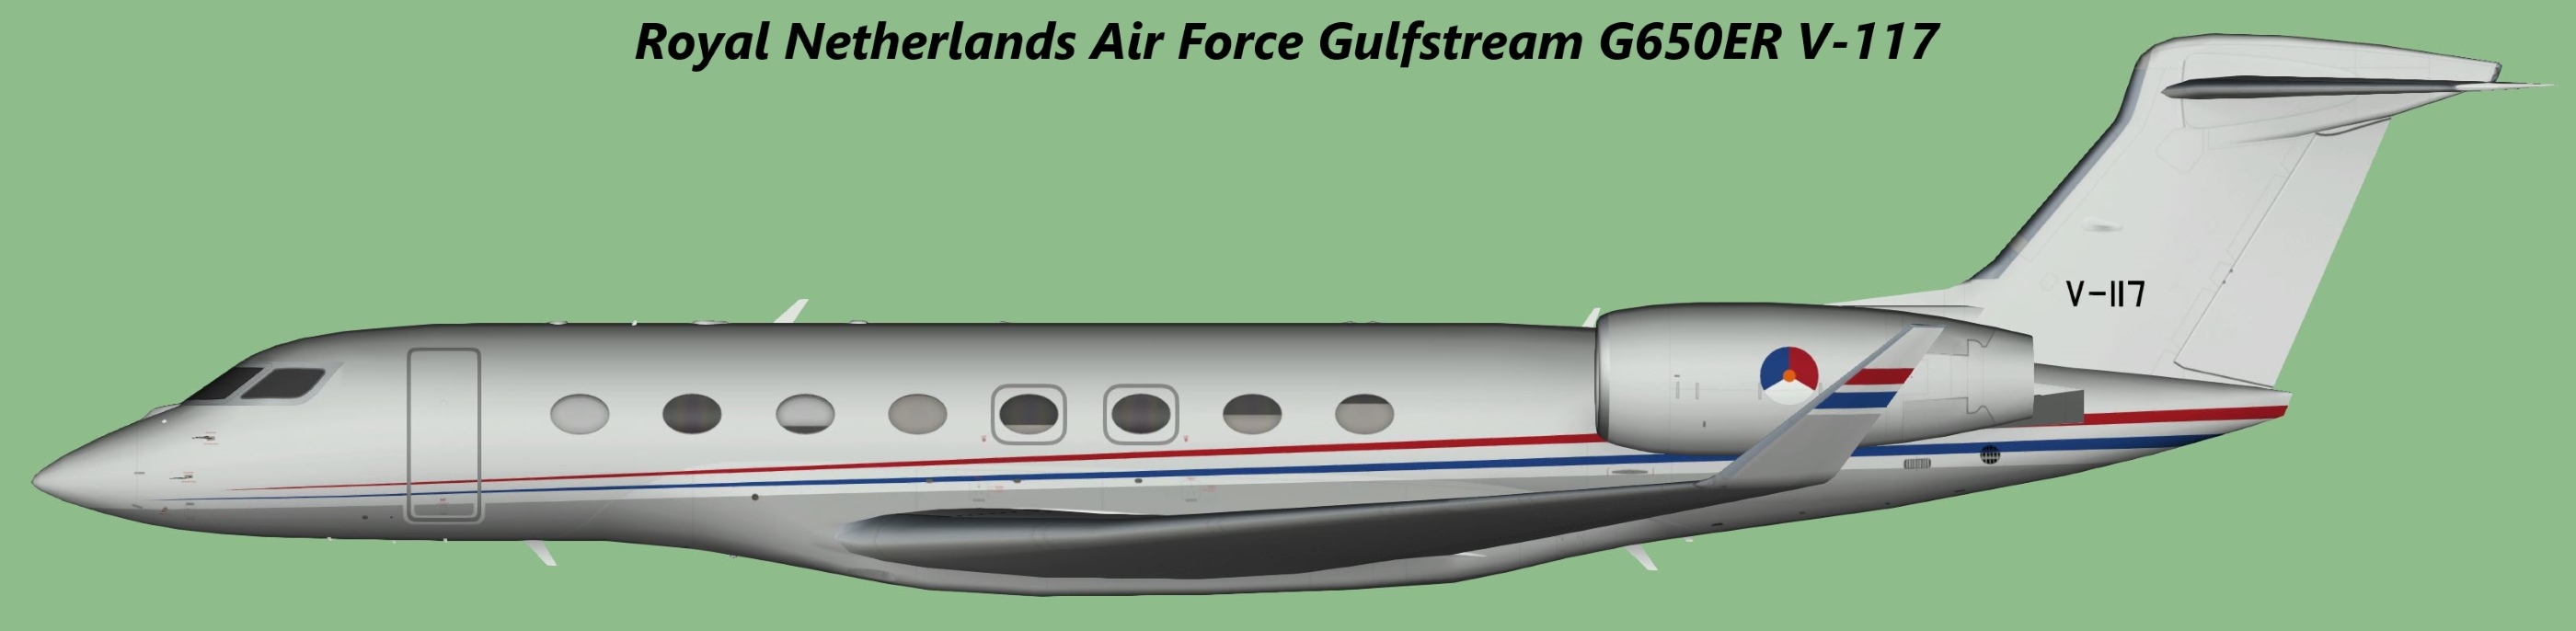 Royal Netherlands Air Force Gulfstream G650ER V-117